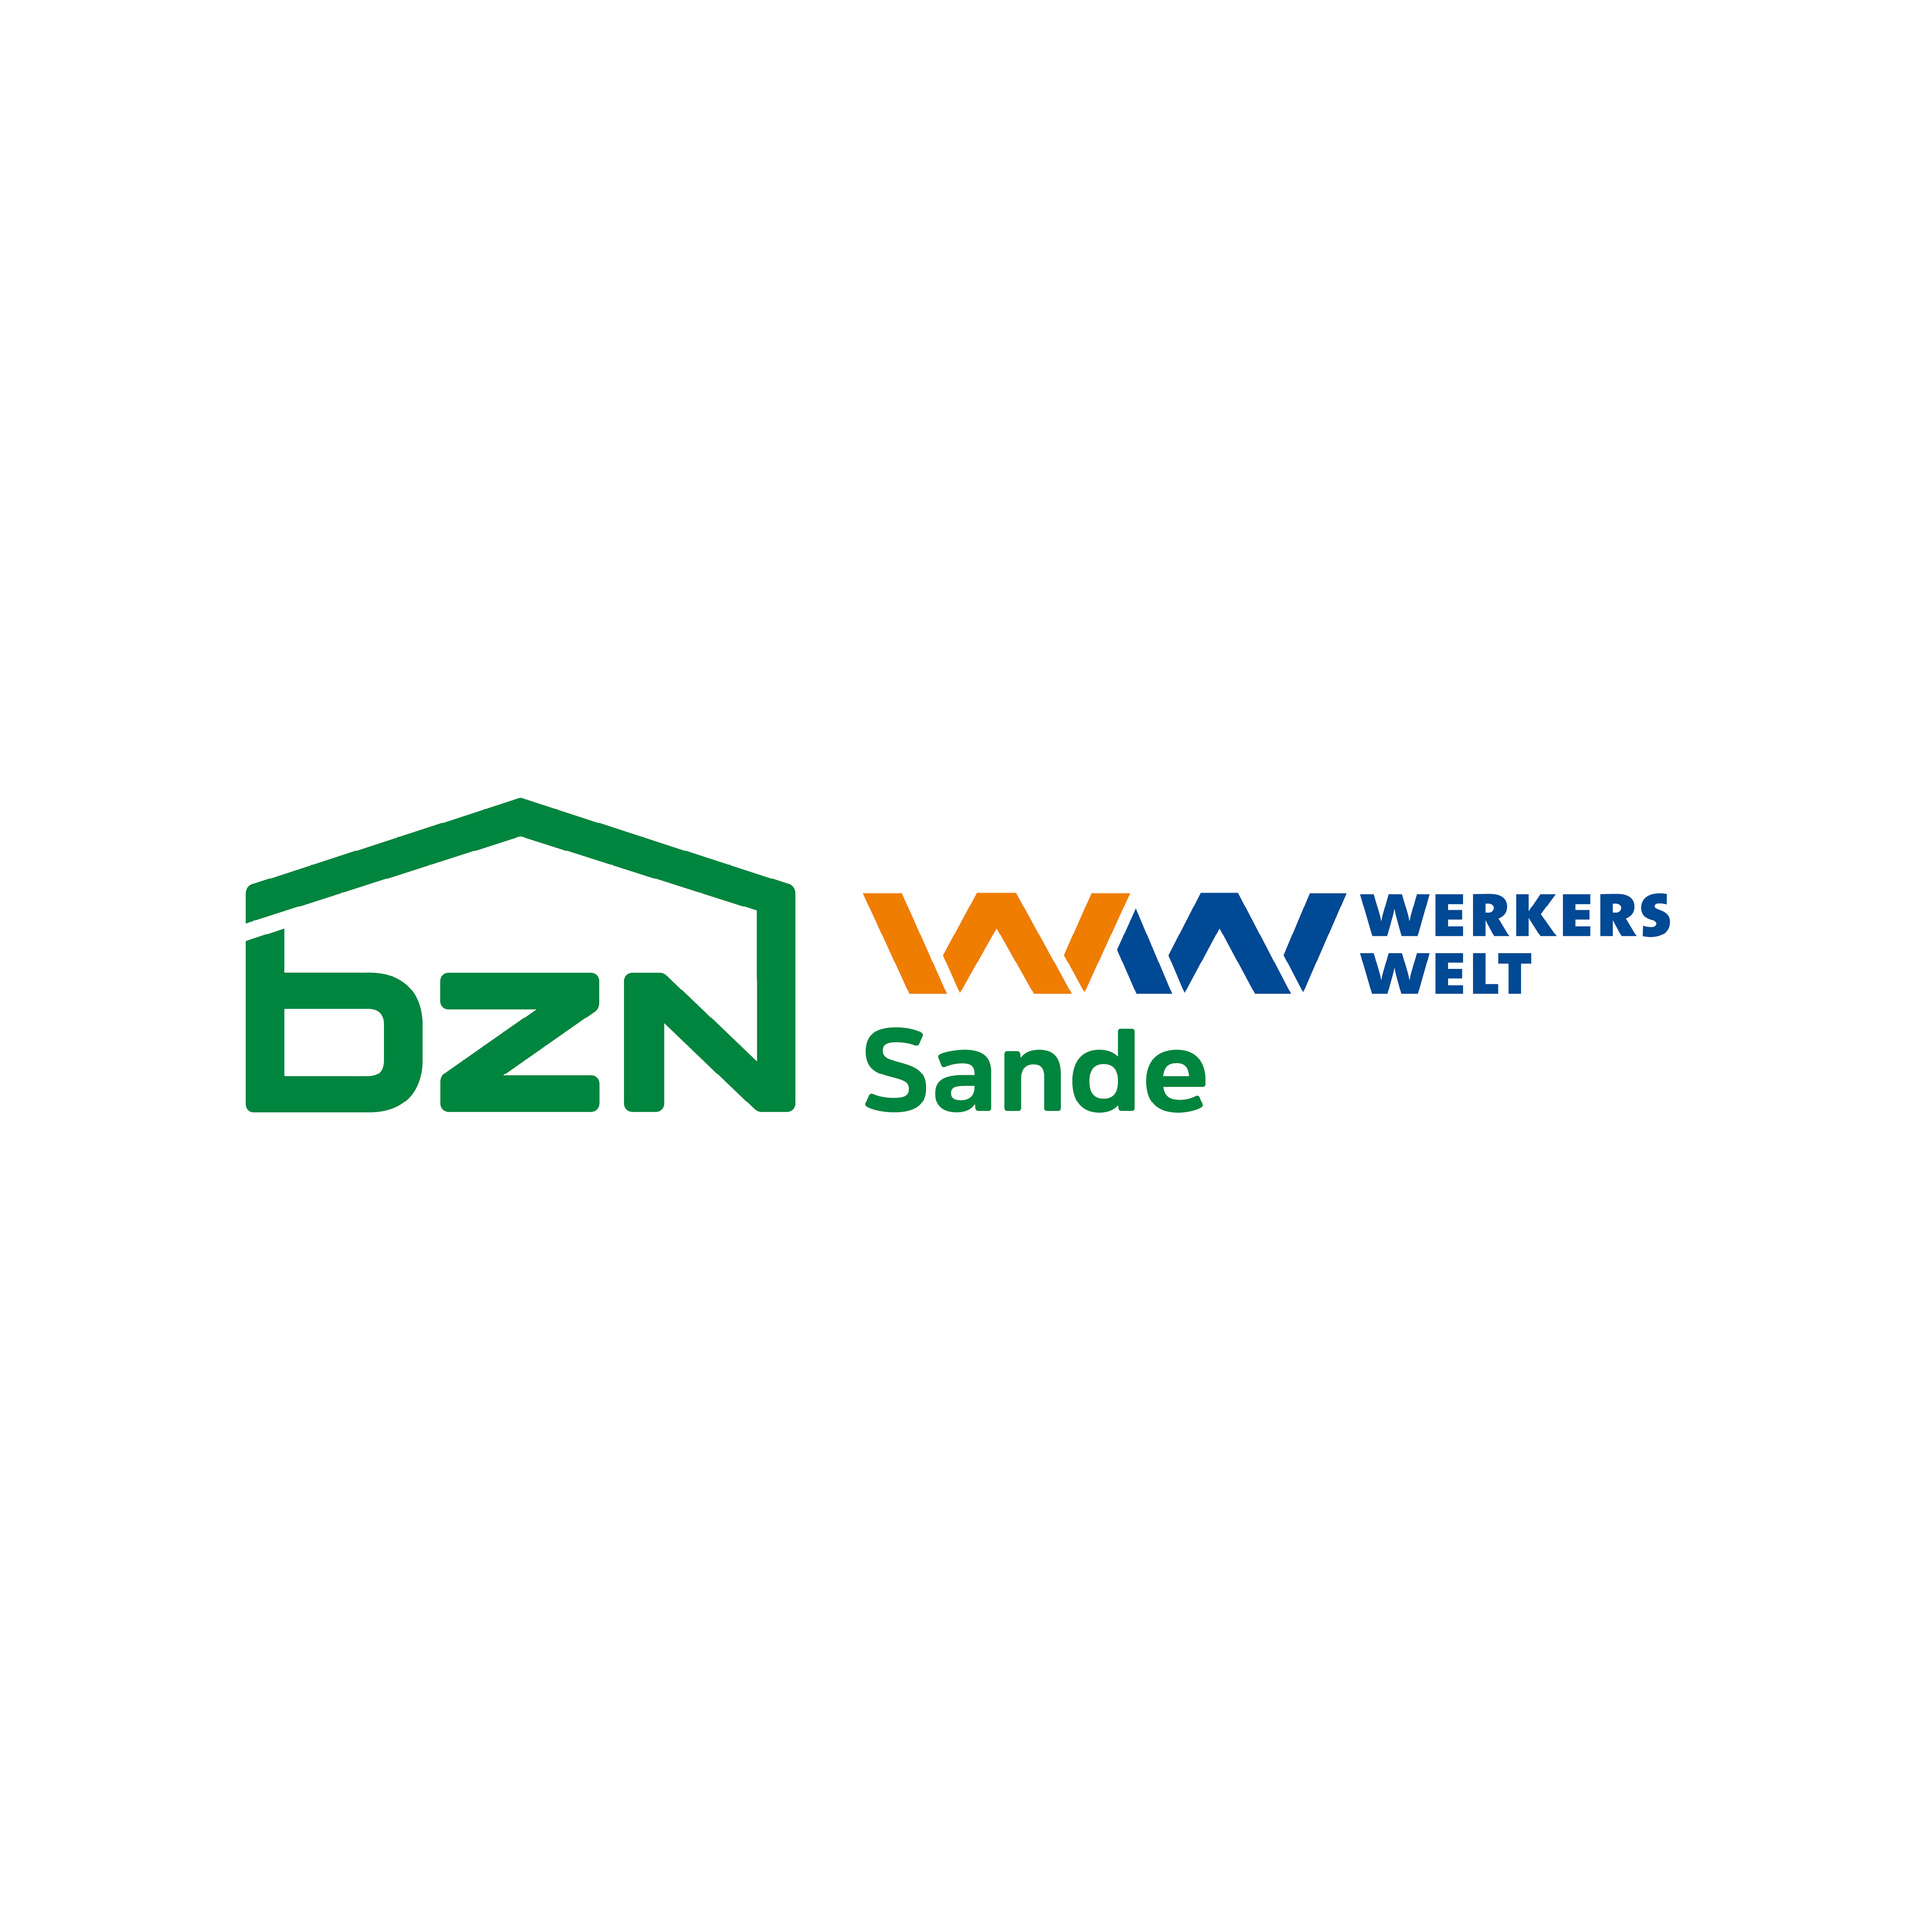 Logo Werkers Welt Sande - BZN Bauzentrum Sande GmbH & Co. KG